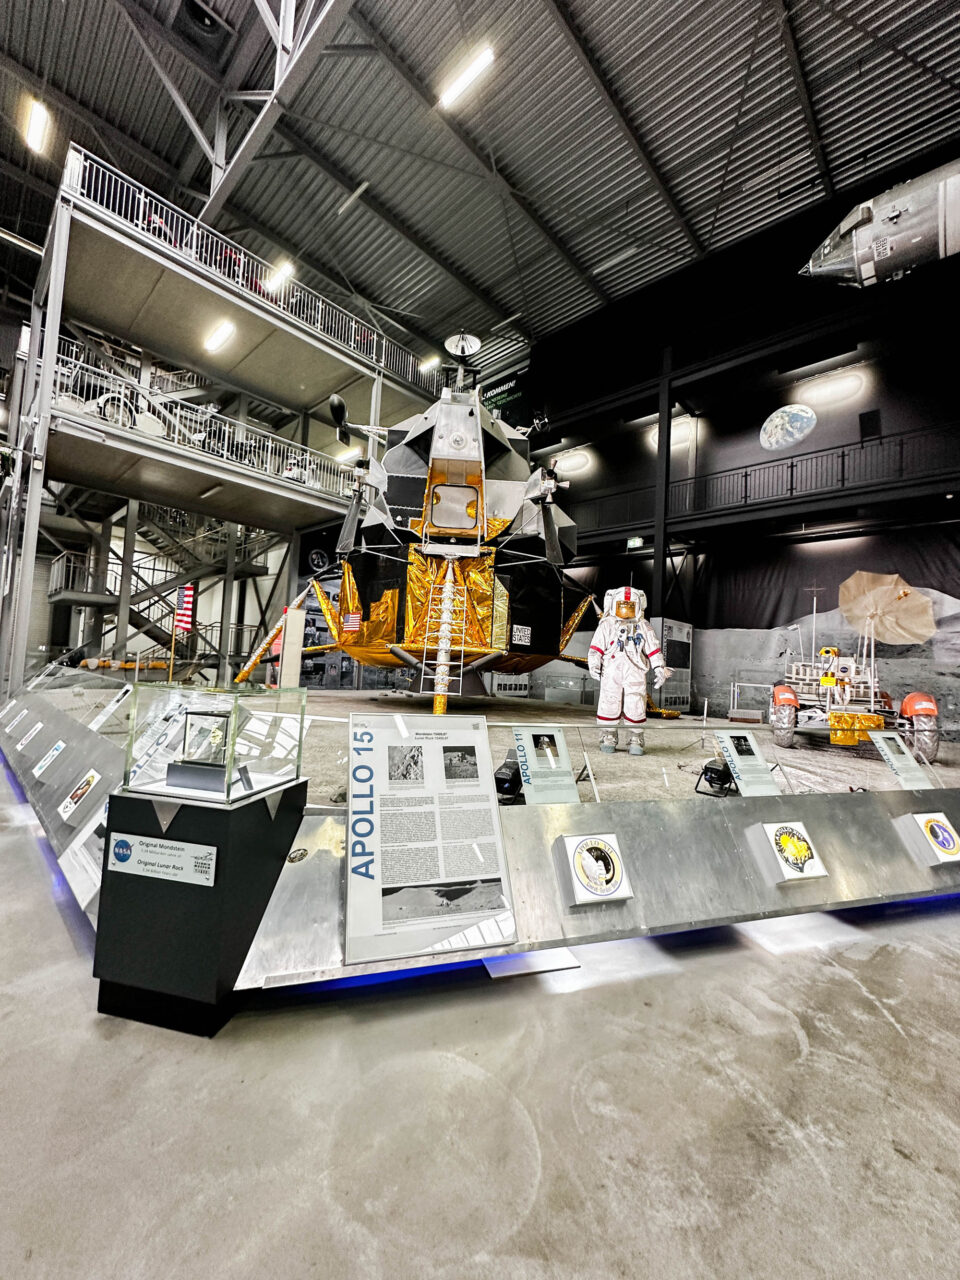 The Apollo 15 exhibit at the Technik Museum in Speyer, Germany.